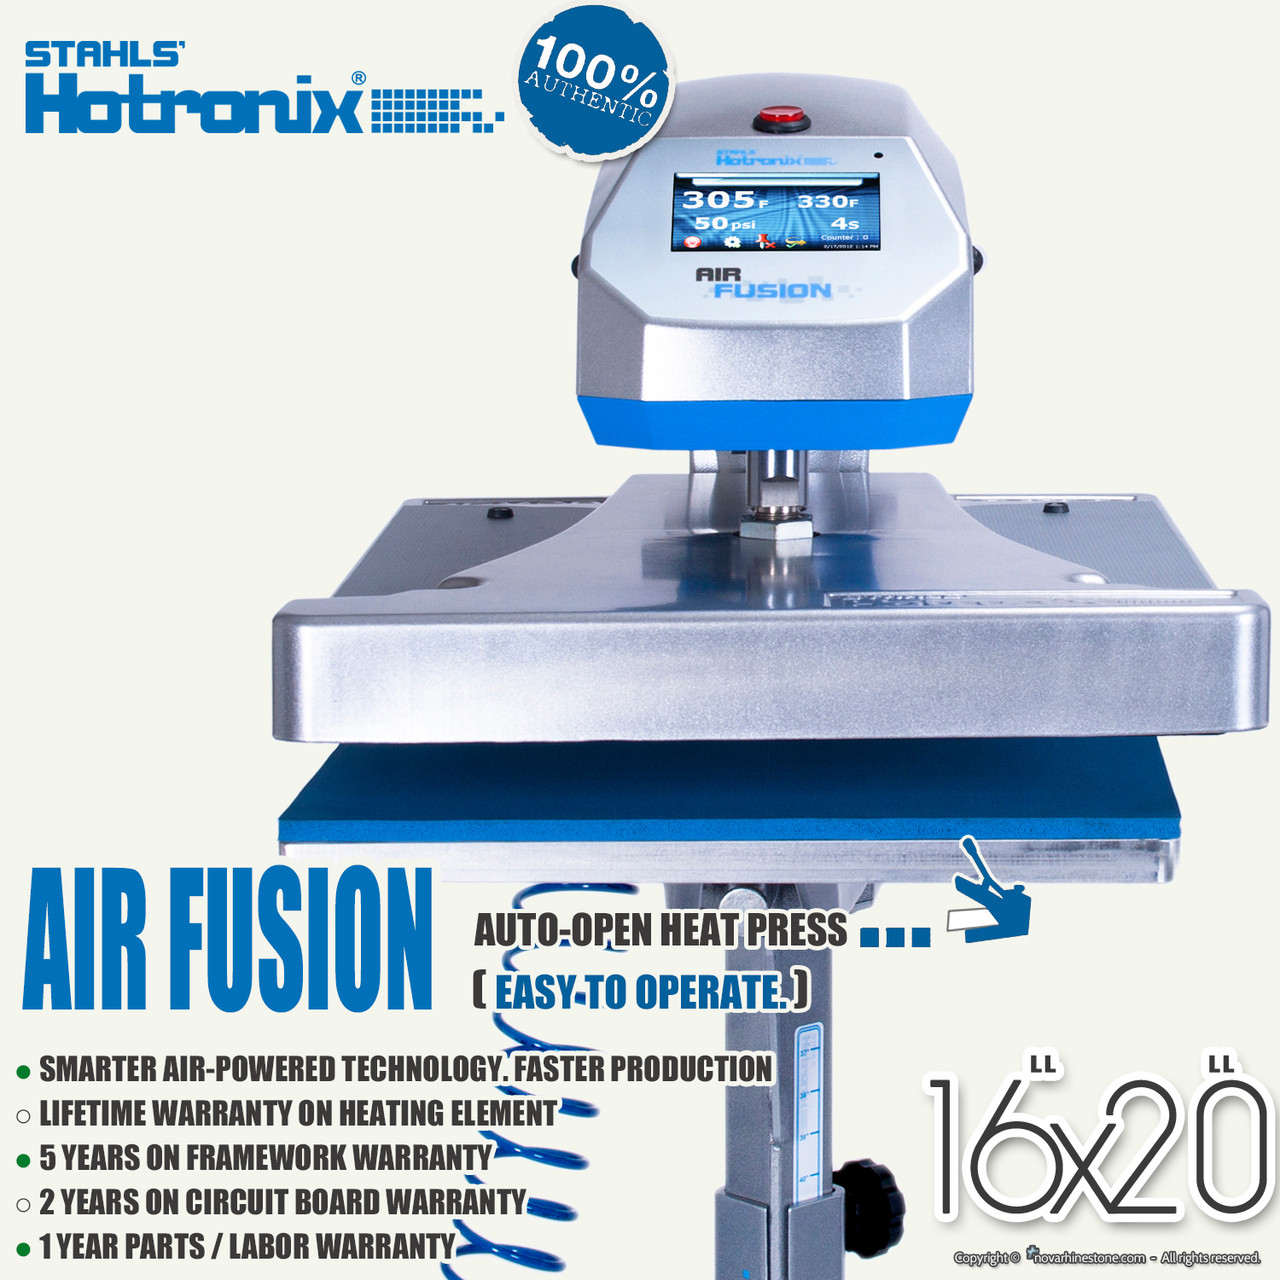 Hotronix Heat PressParts and Accessories for Hotronix Heat Press